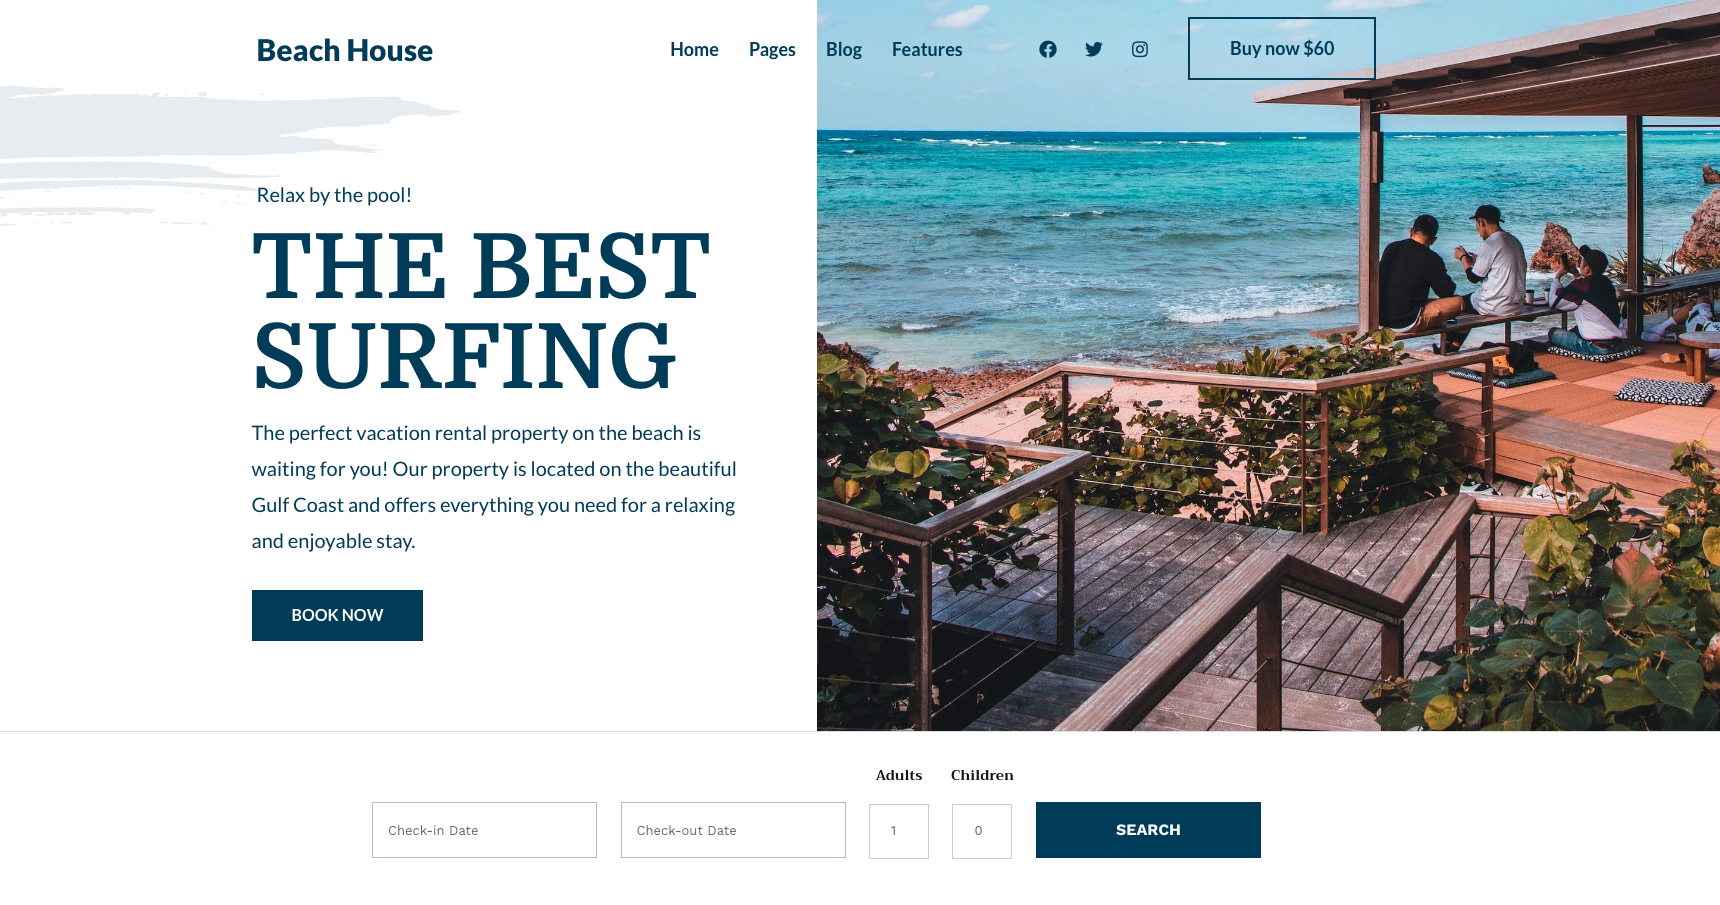 Bellevue website templates for short-term vacation rentals